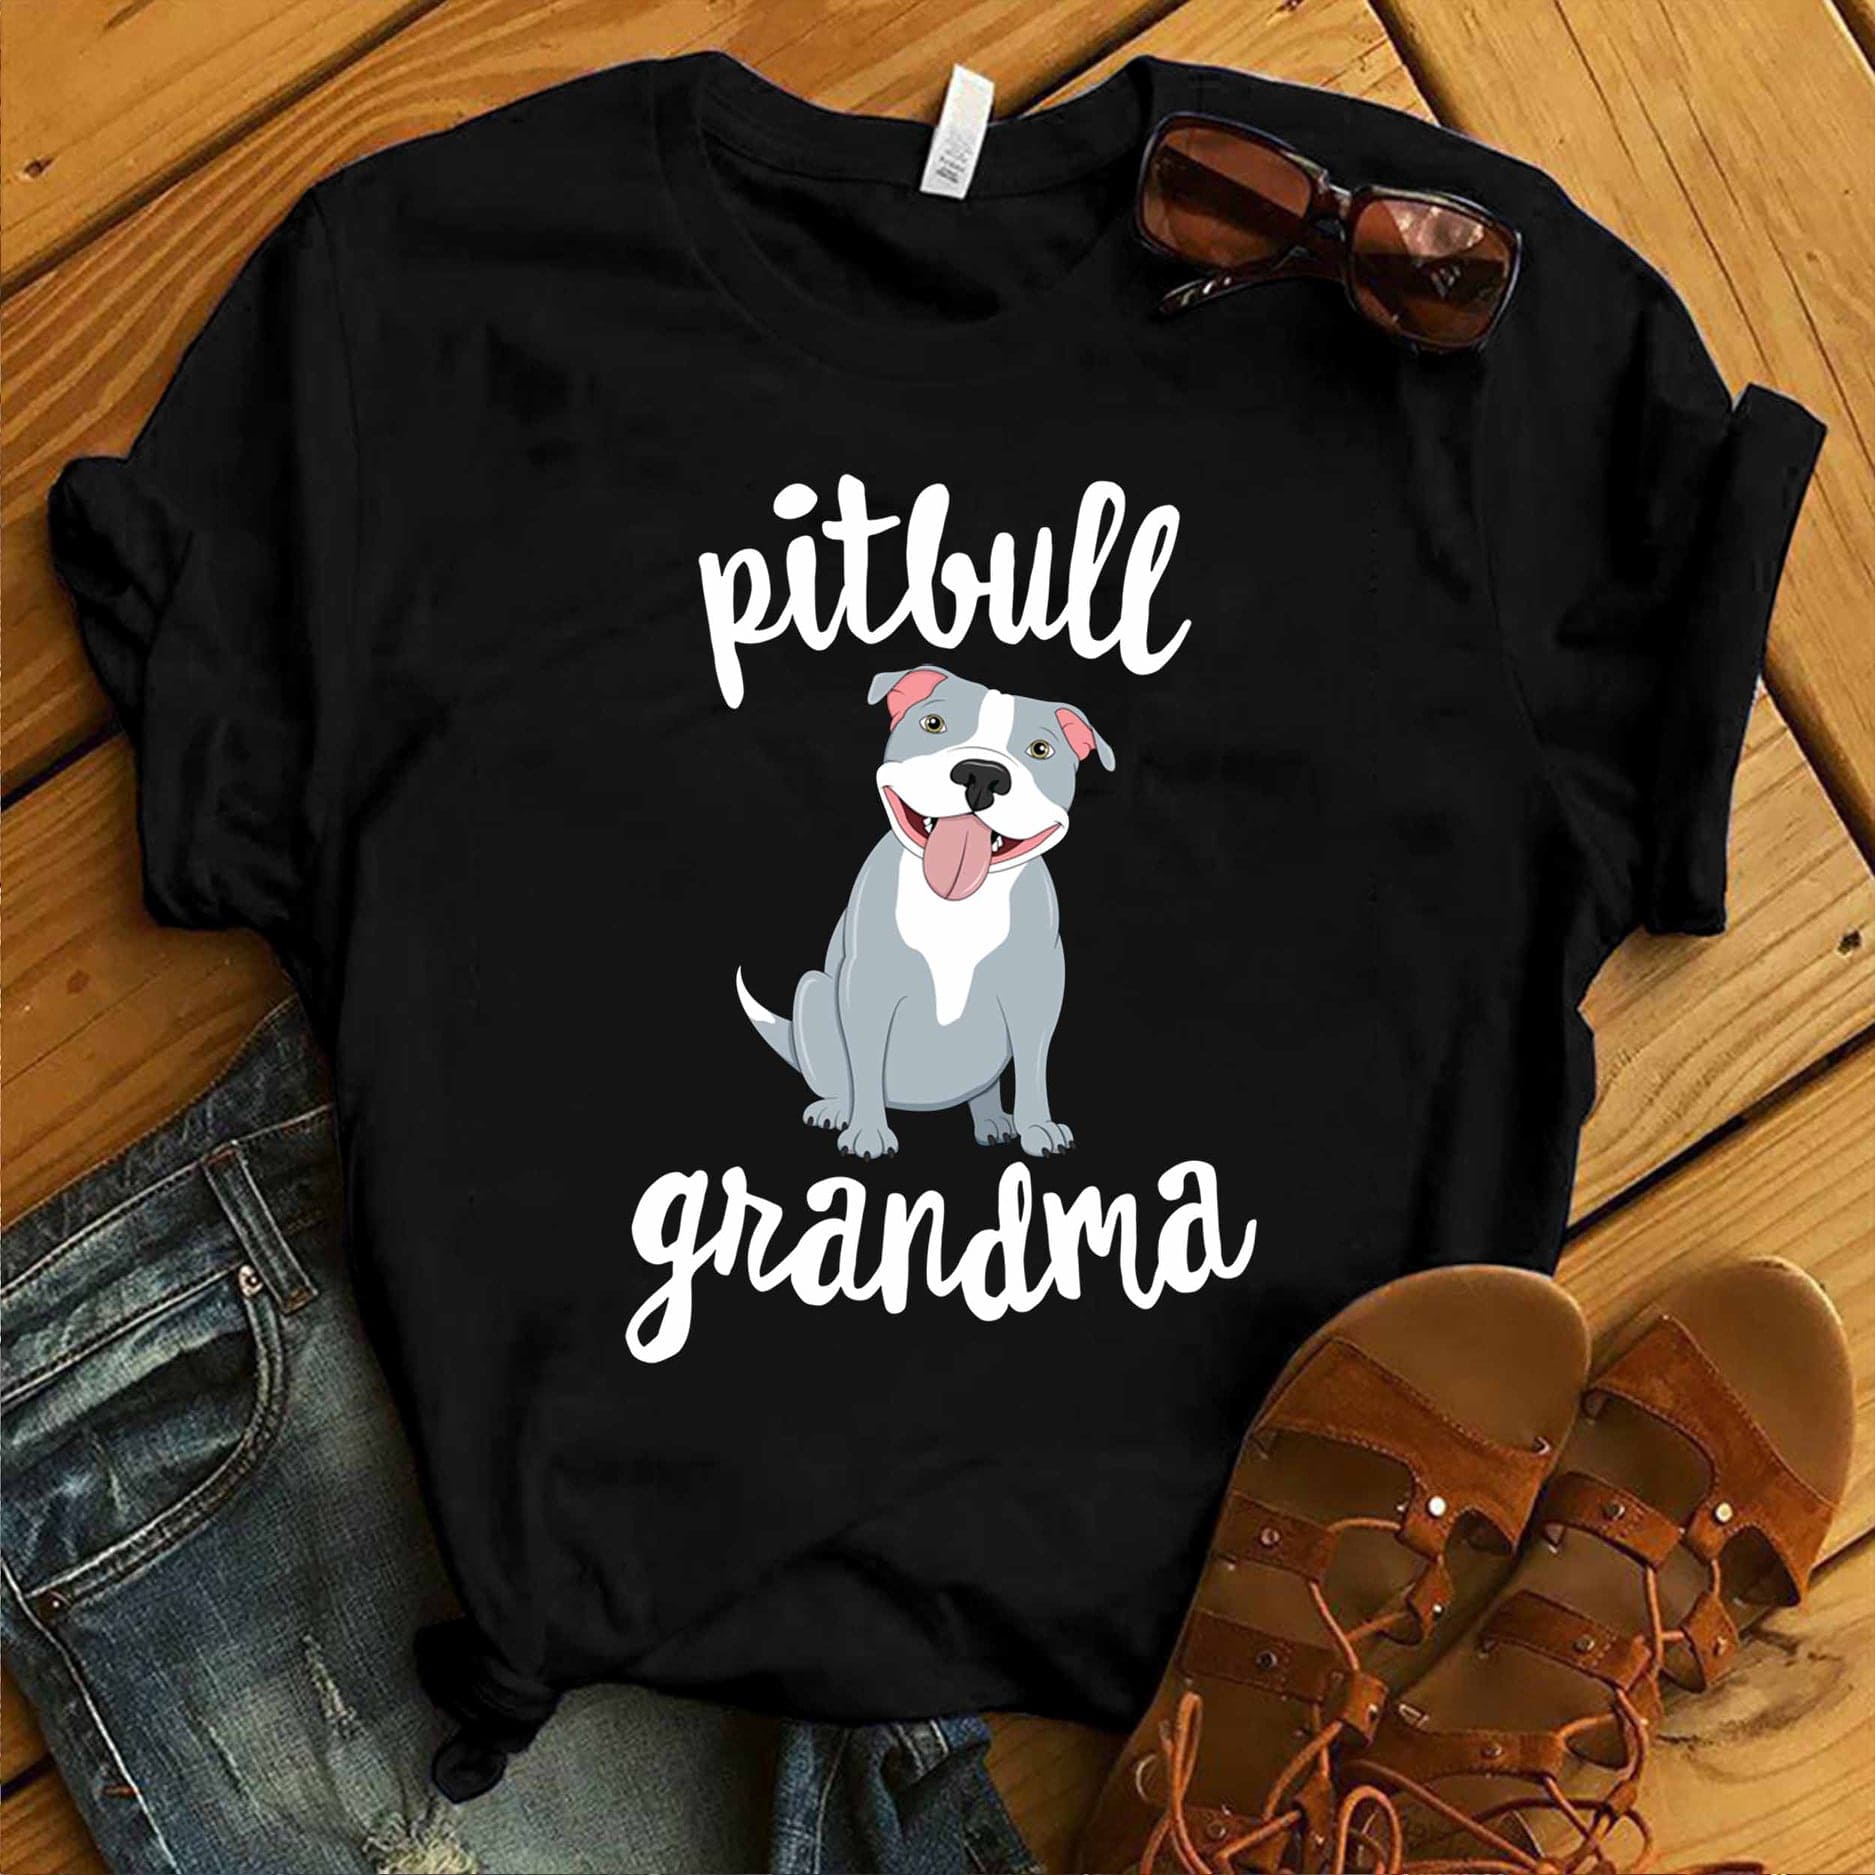 Cute Pitbull Graphic T-shirt - Pitbull grandma